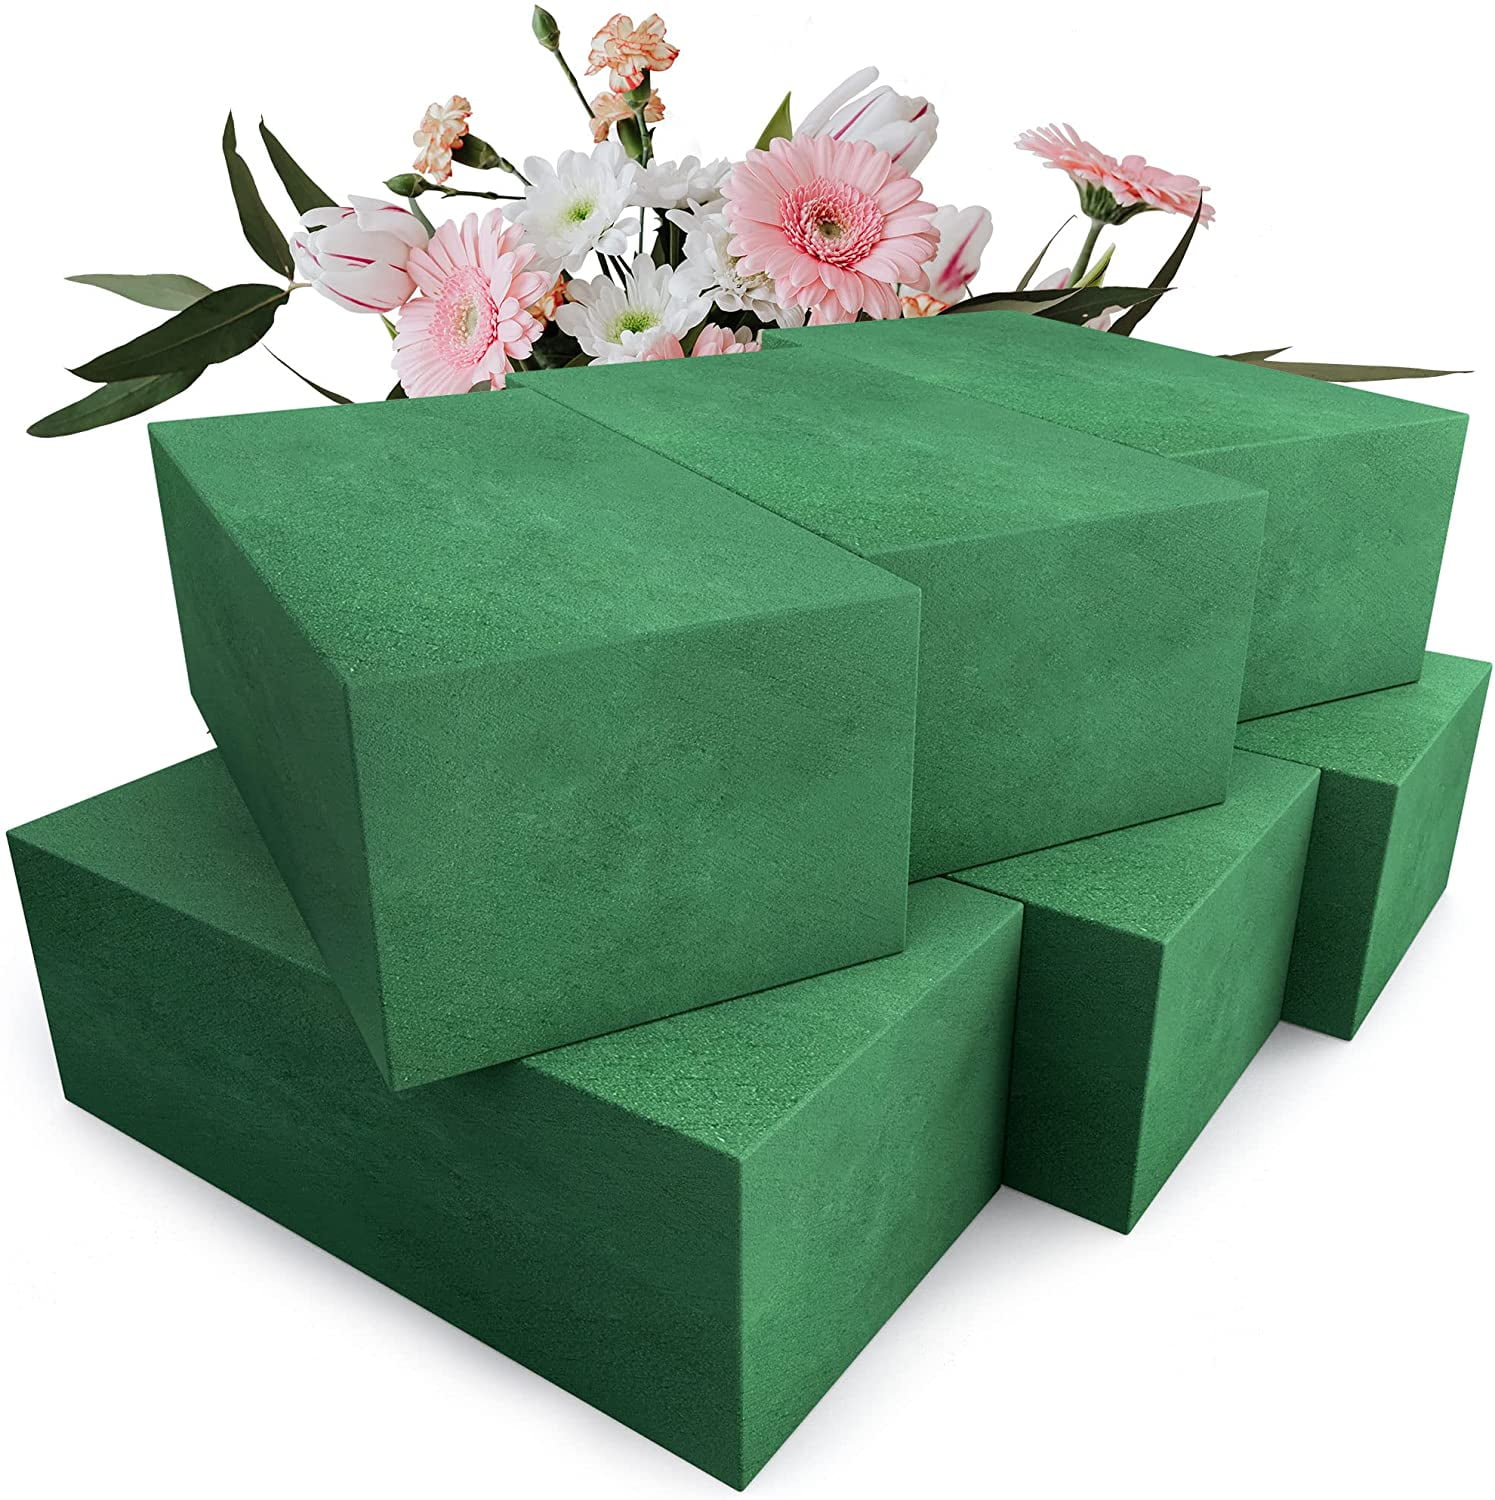  QTLCOHD 8Pcs Floral Foam Blocks 9x4x3 Inch Green Foam Blocks  for Flower Arrangements Dry Florist Foam Bricks for Artificial Flowers :  Arts, Crafts & Sewing